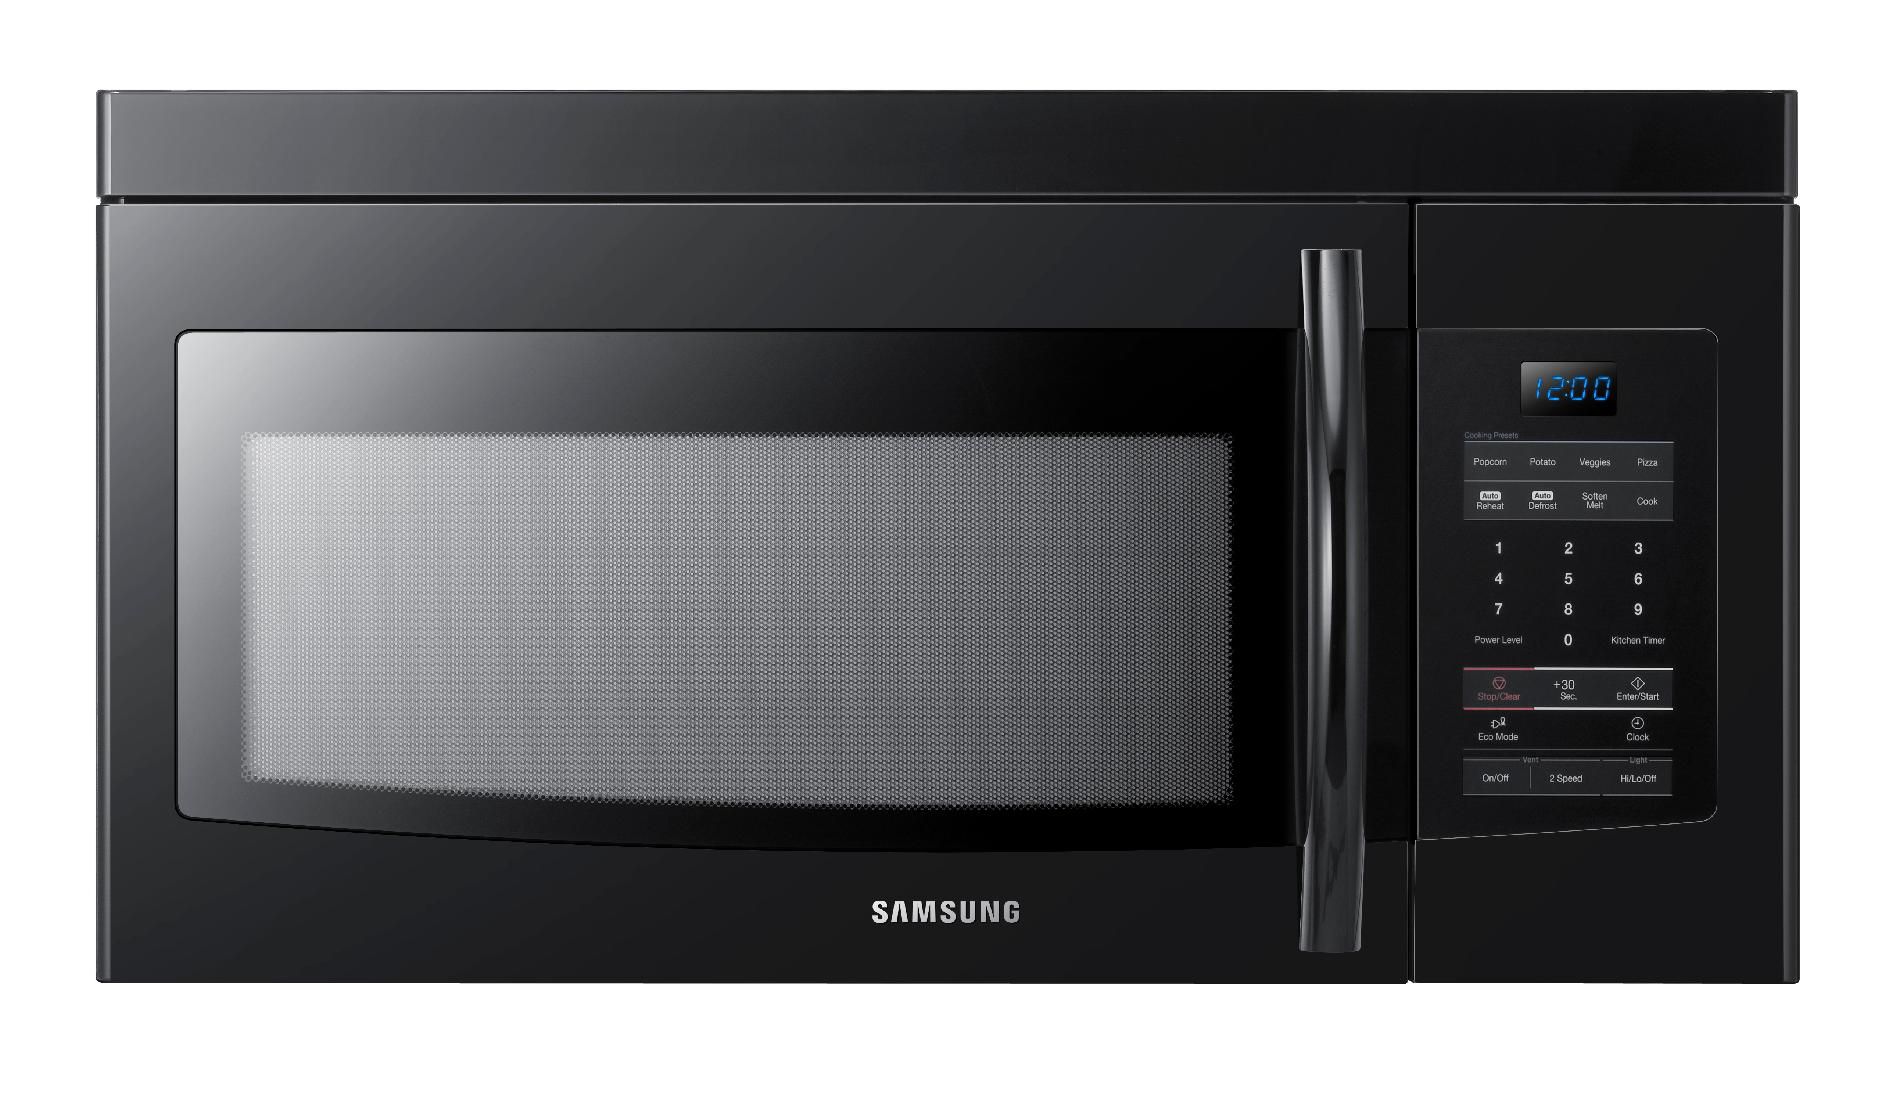 Samsung SMH1622B 1.6 cu. ft. Over-the-Range Microwave - Black